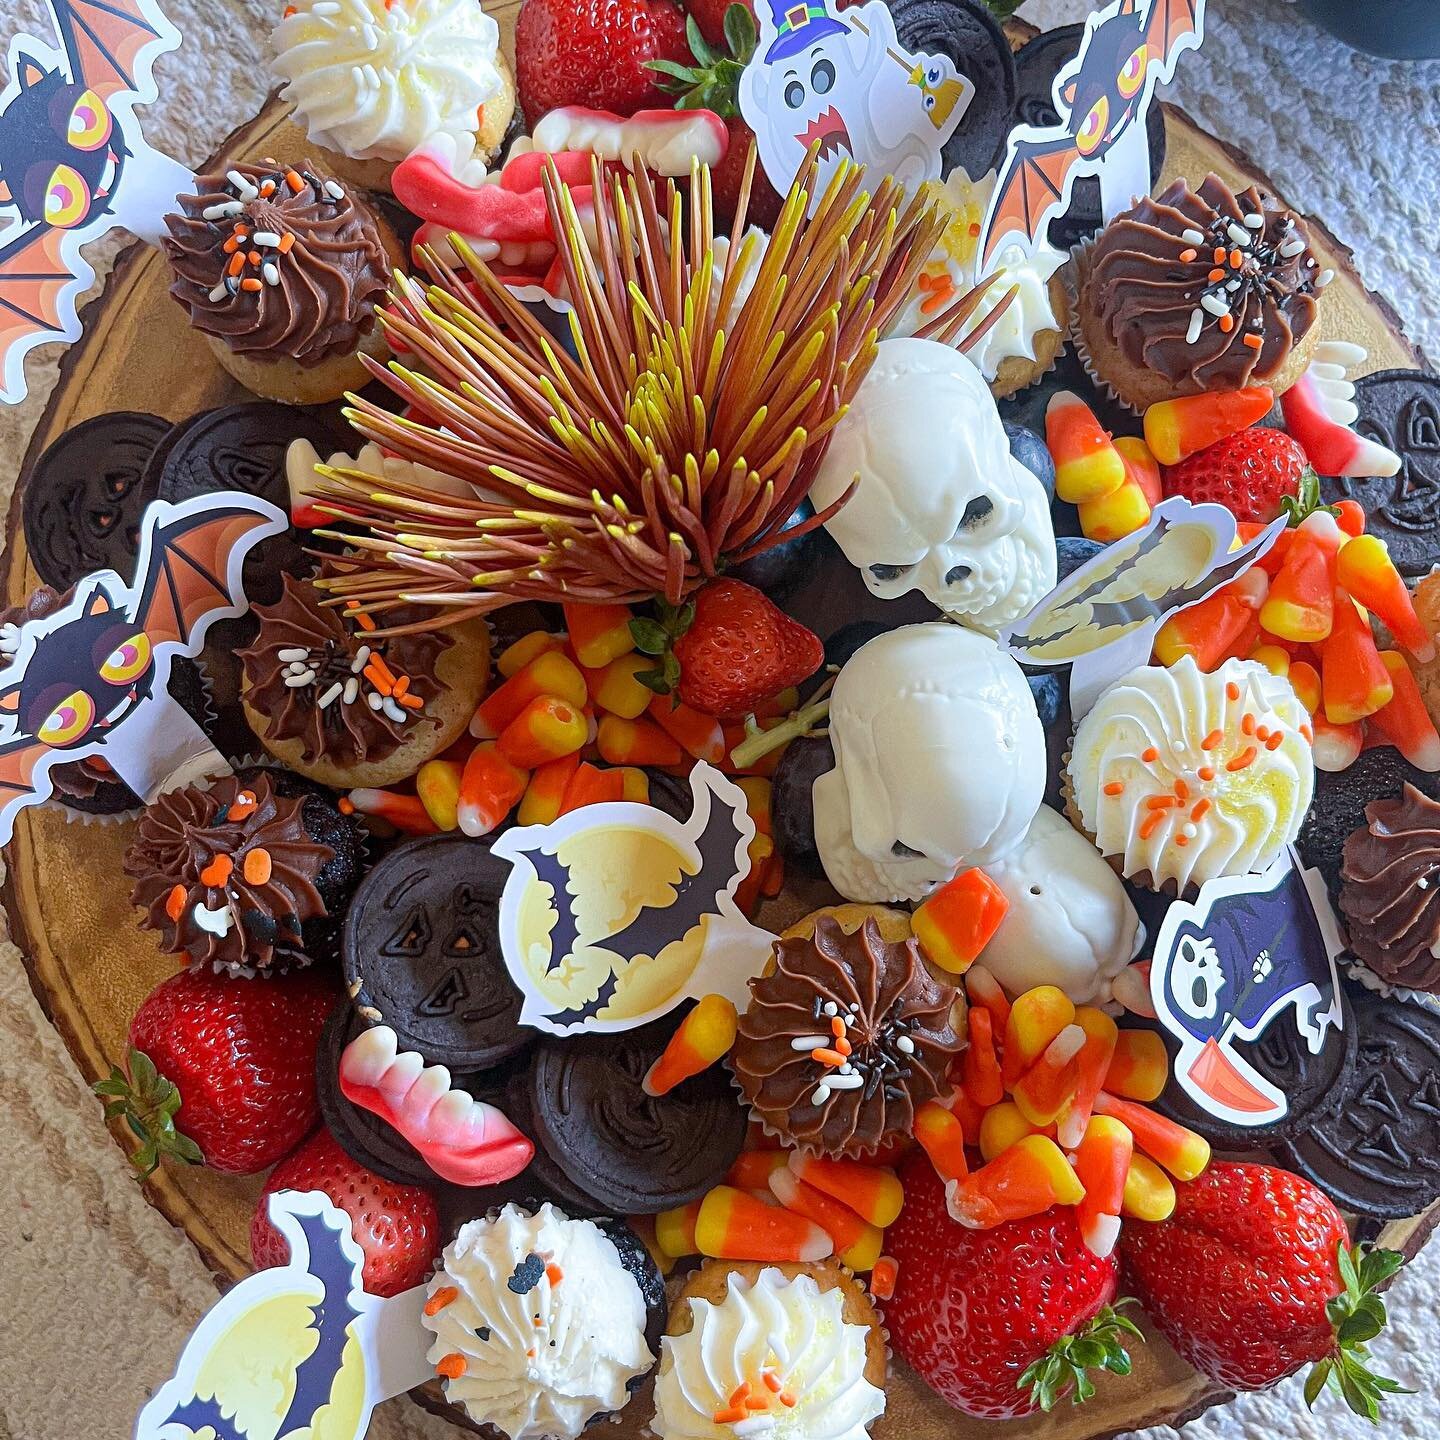 Sweet Halloween 🎃 Board 🍭 

#candy #cupcakes #sweet #sweettooth #halloween #halloweentheme #candyboard #sweetboard #yum #cute #santabarbara #california #805 #weekend #saturday